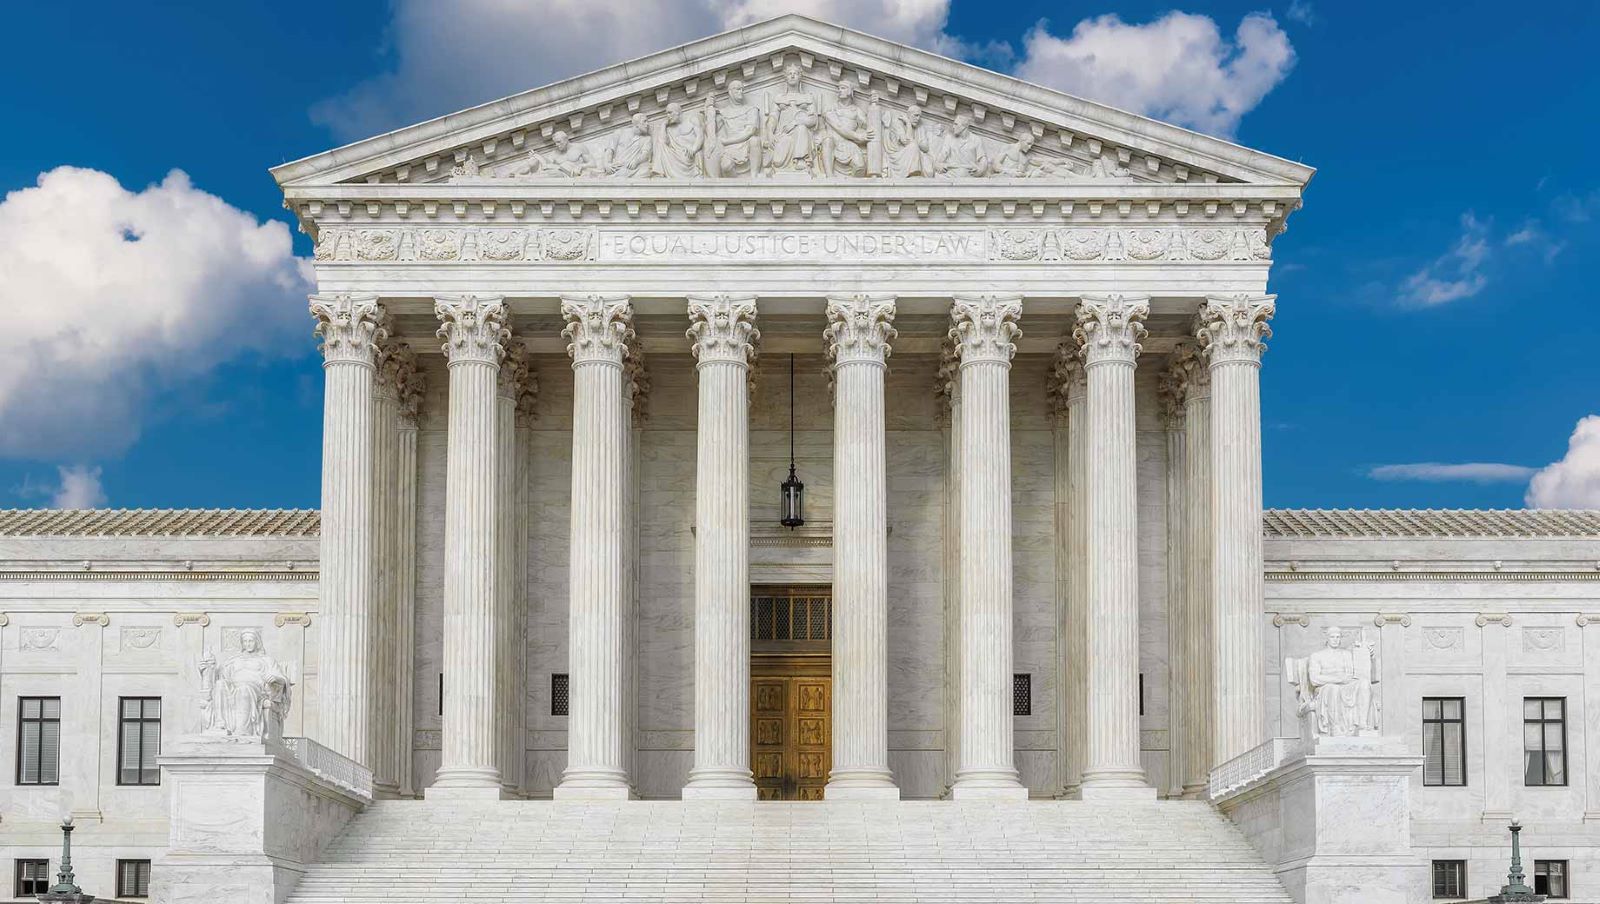 picture of the supreme court